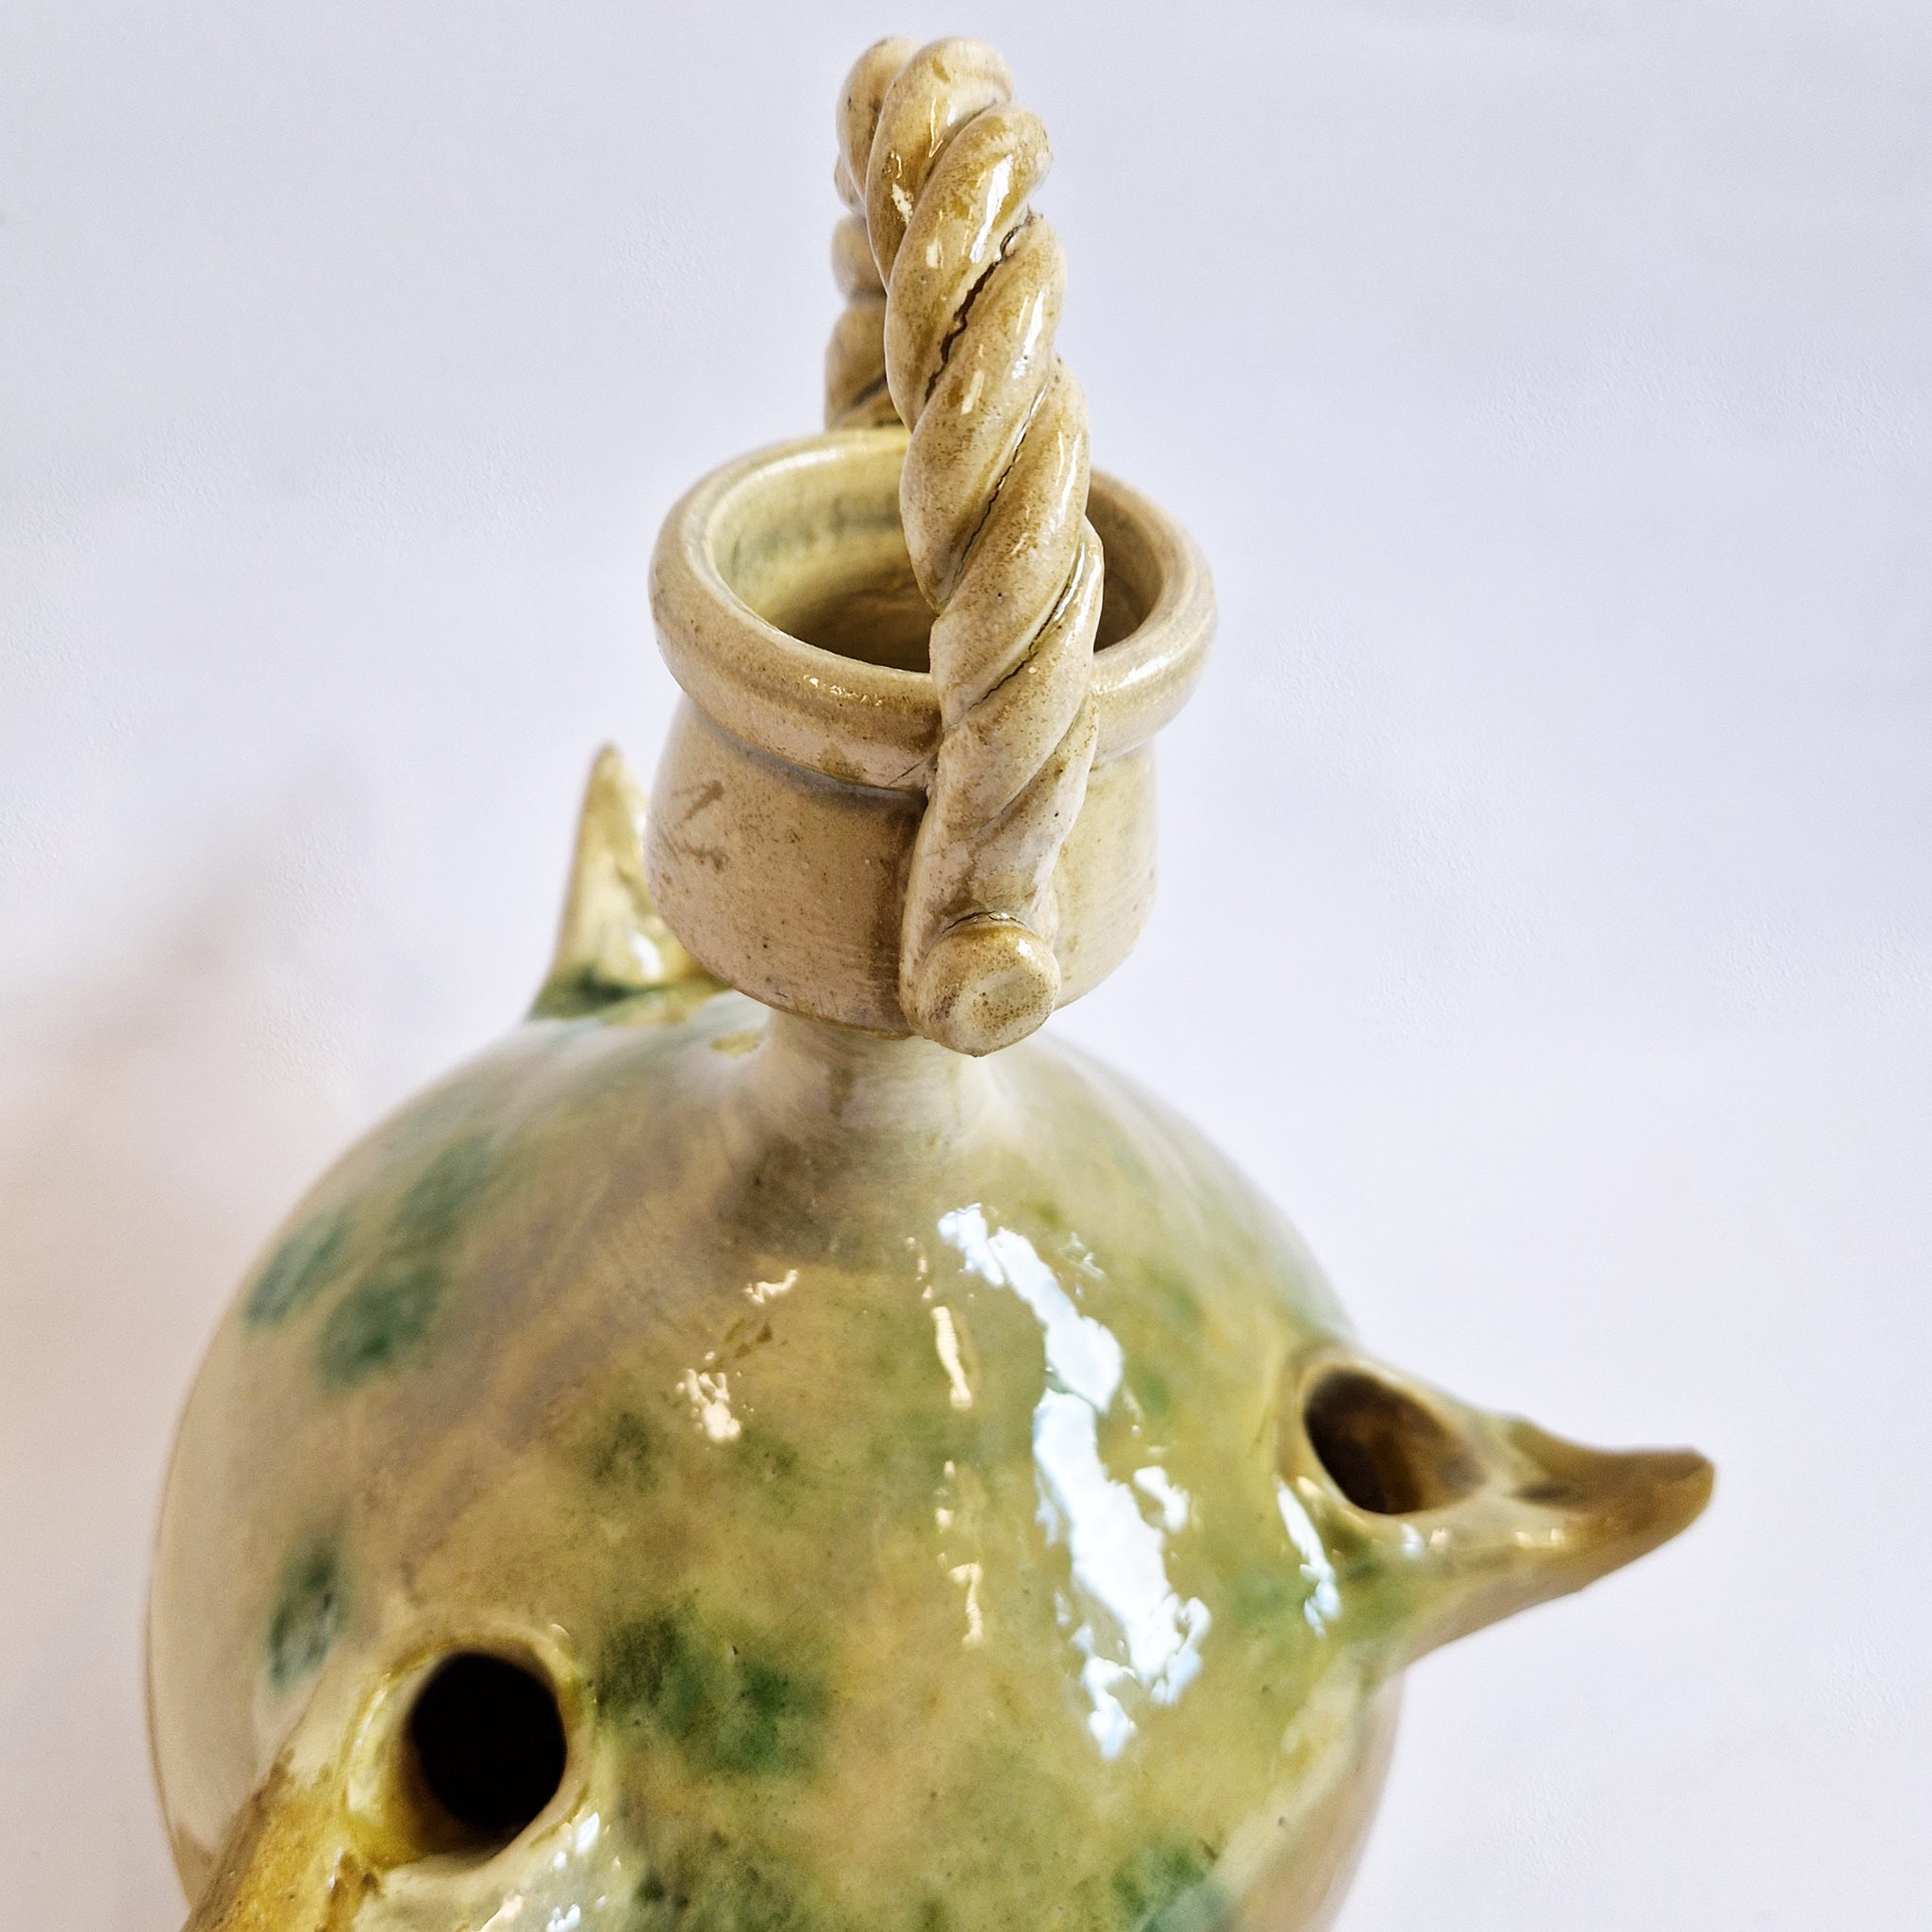 Vintage amphora with three spouts